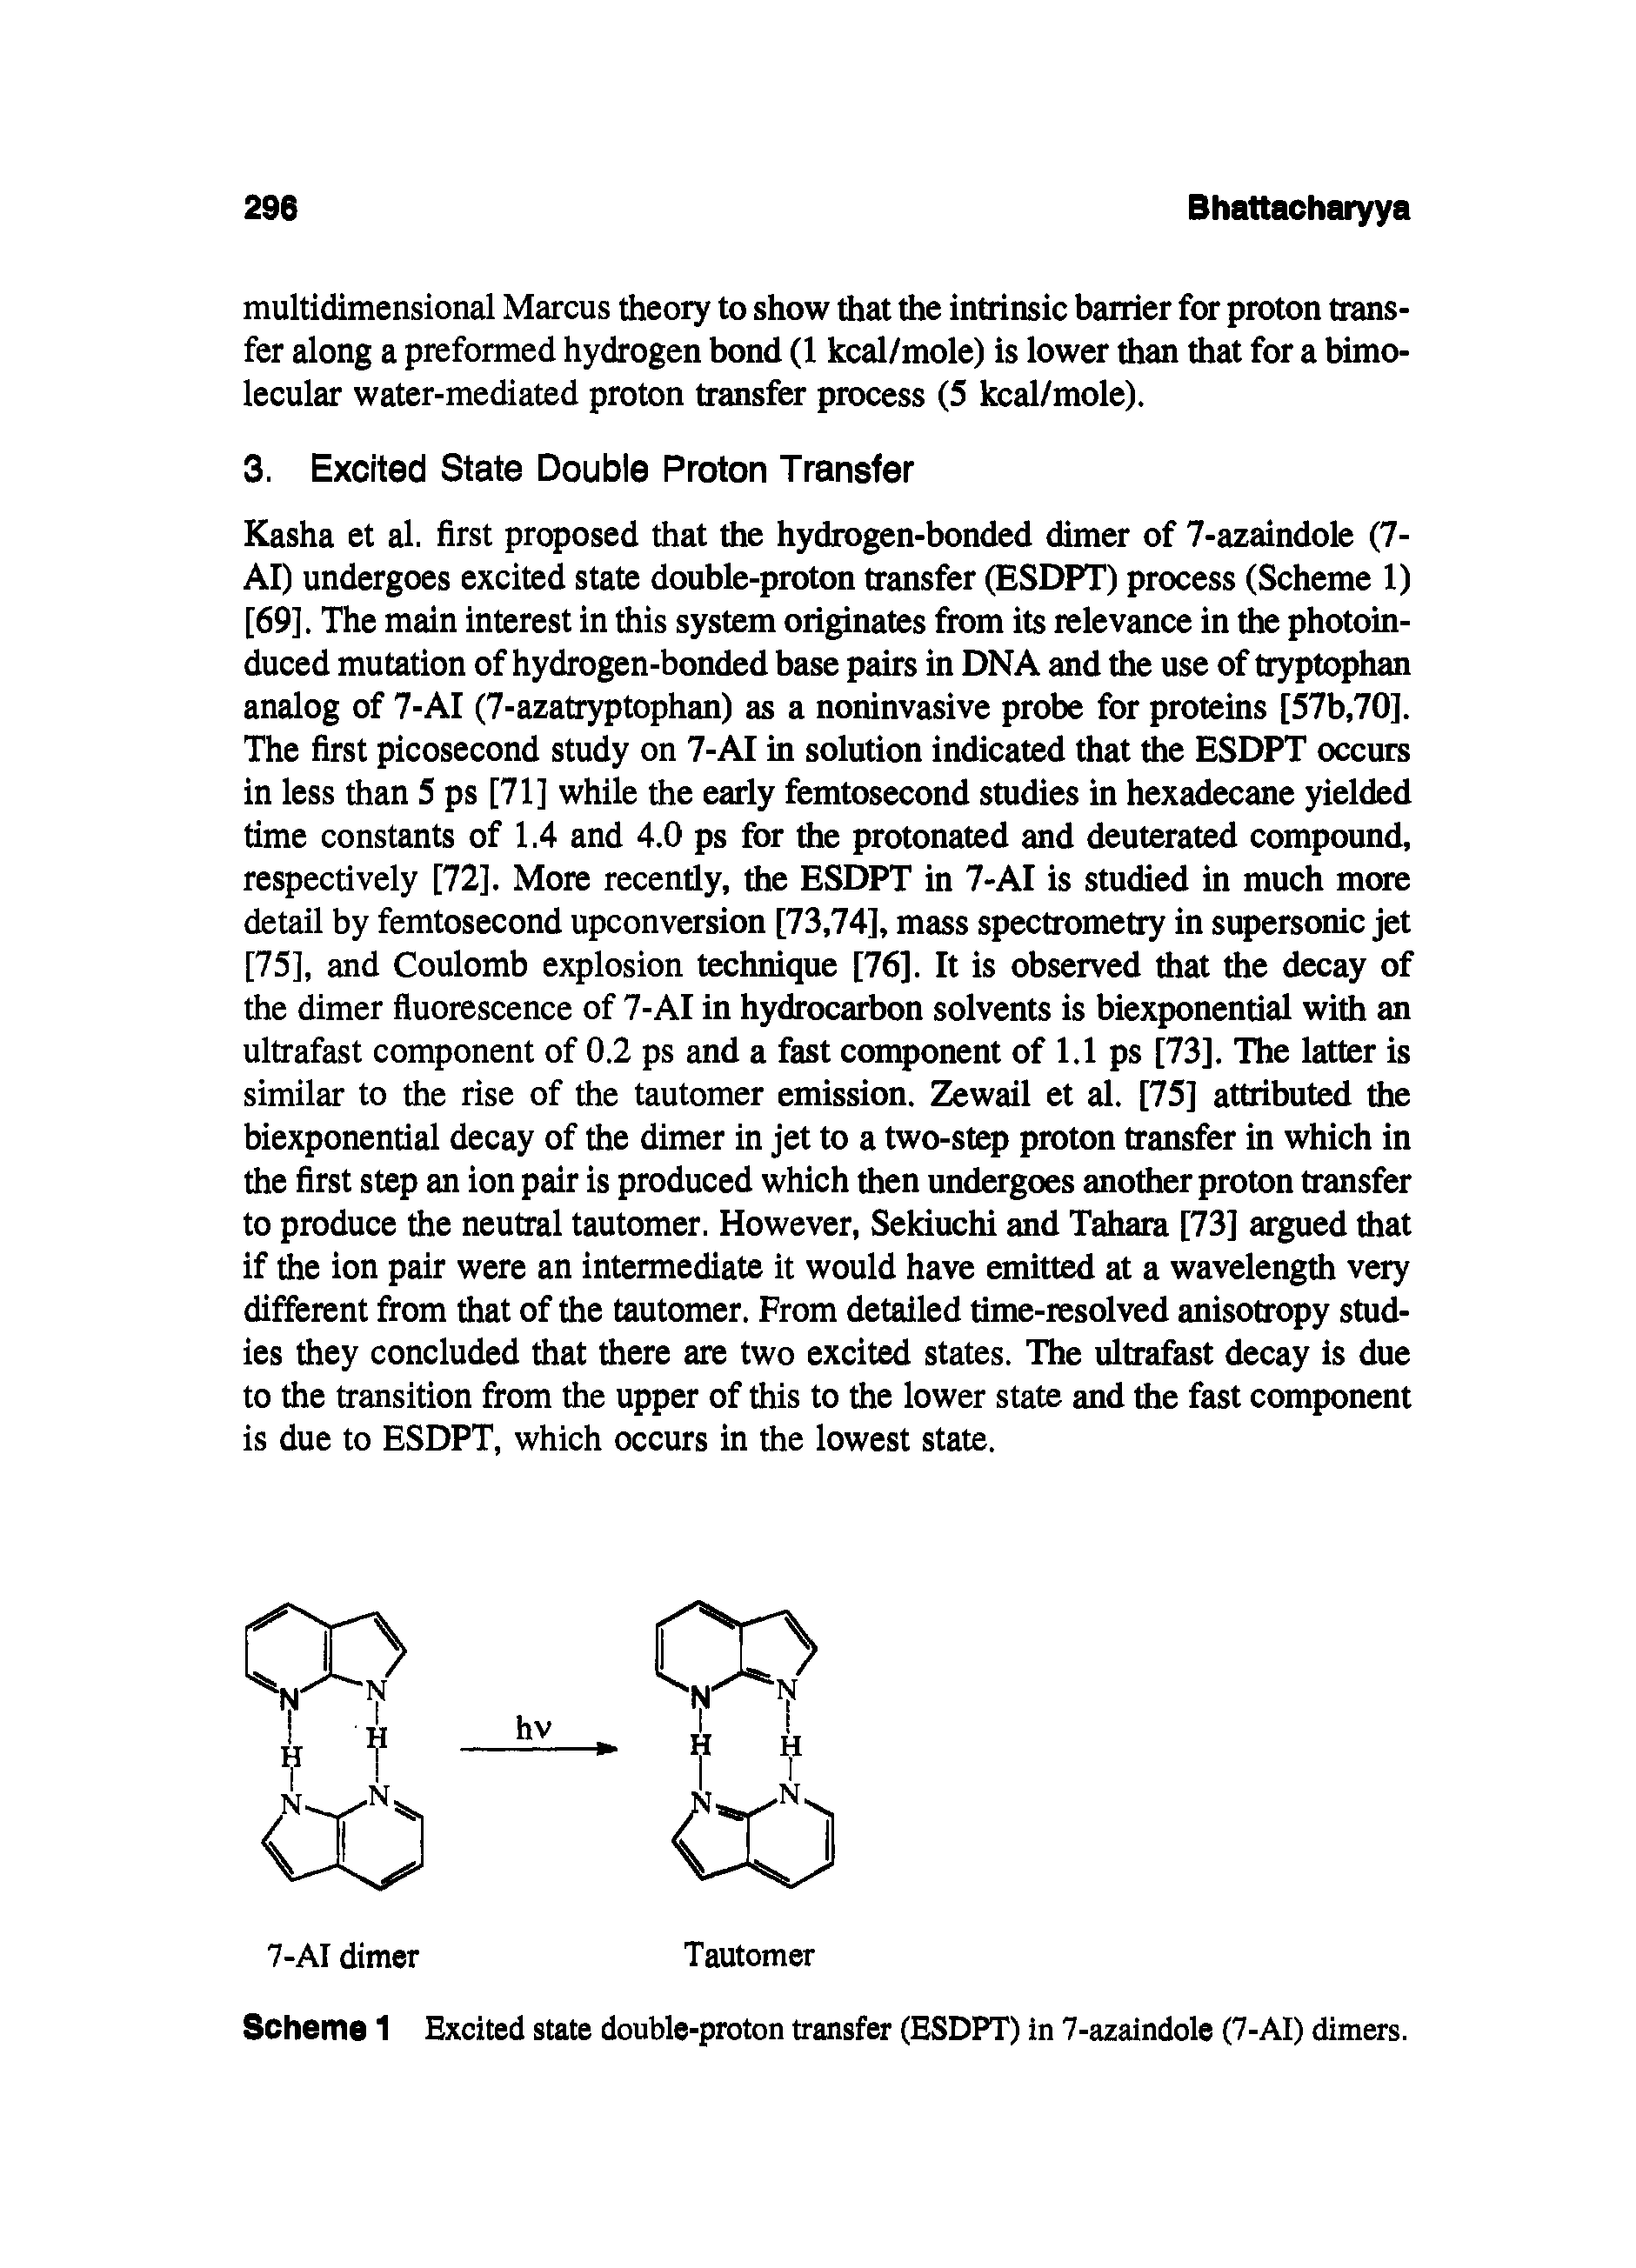 Scheme 1 Excited state double-proton transfer (ESDPT) in 7-azaindole (7-AI) dimers.